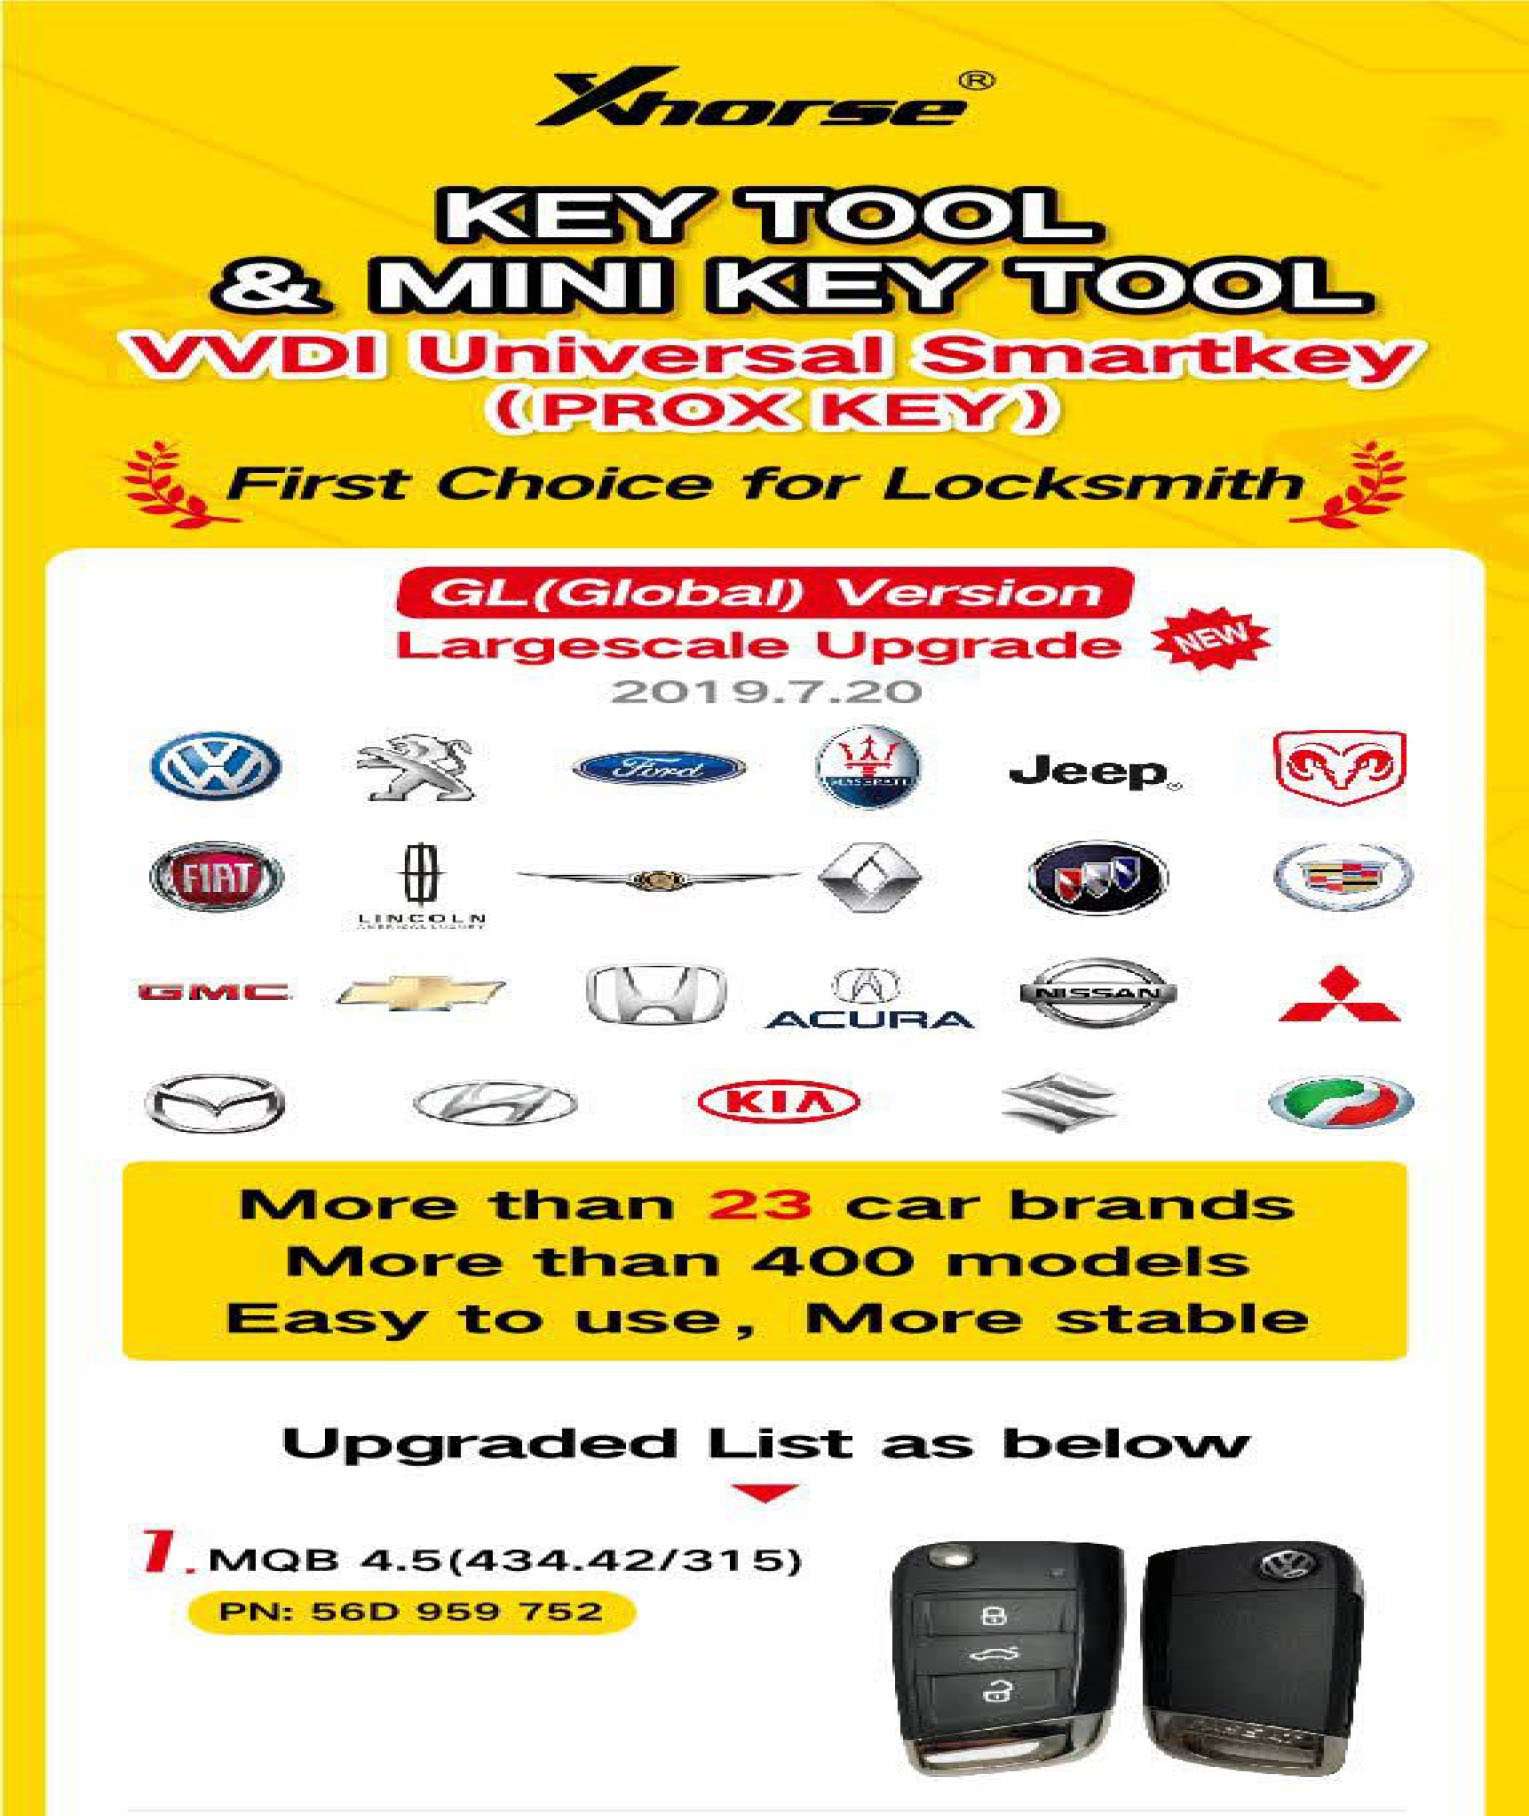 Knife Style / 3-Button Universal Smart Key w/ Proximity Function for VVDI Key Tool (Xhorse) (BUNDLE OF 10) - UHS Hardware